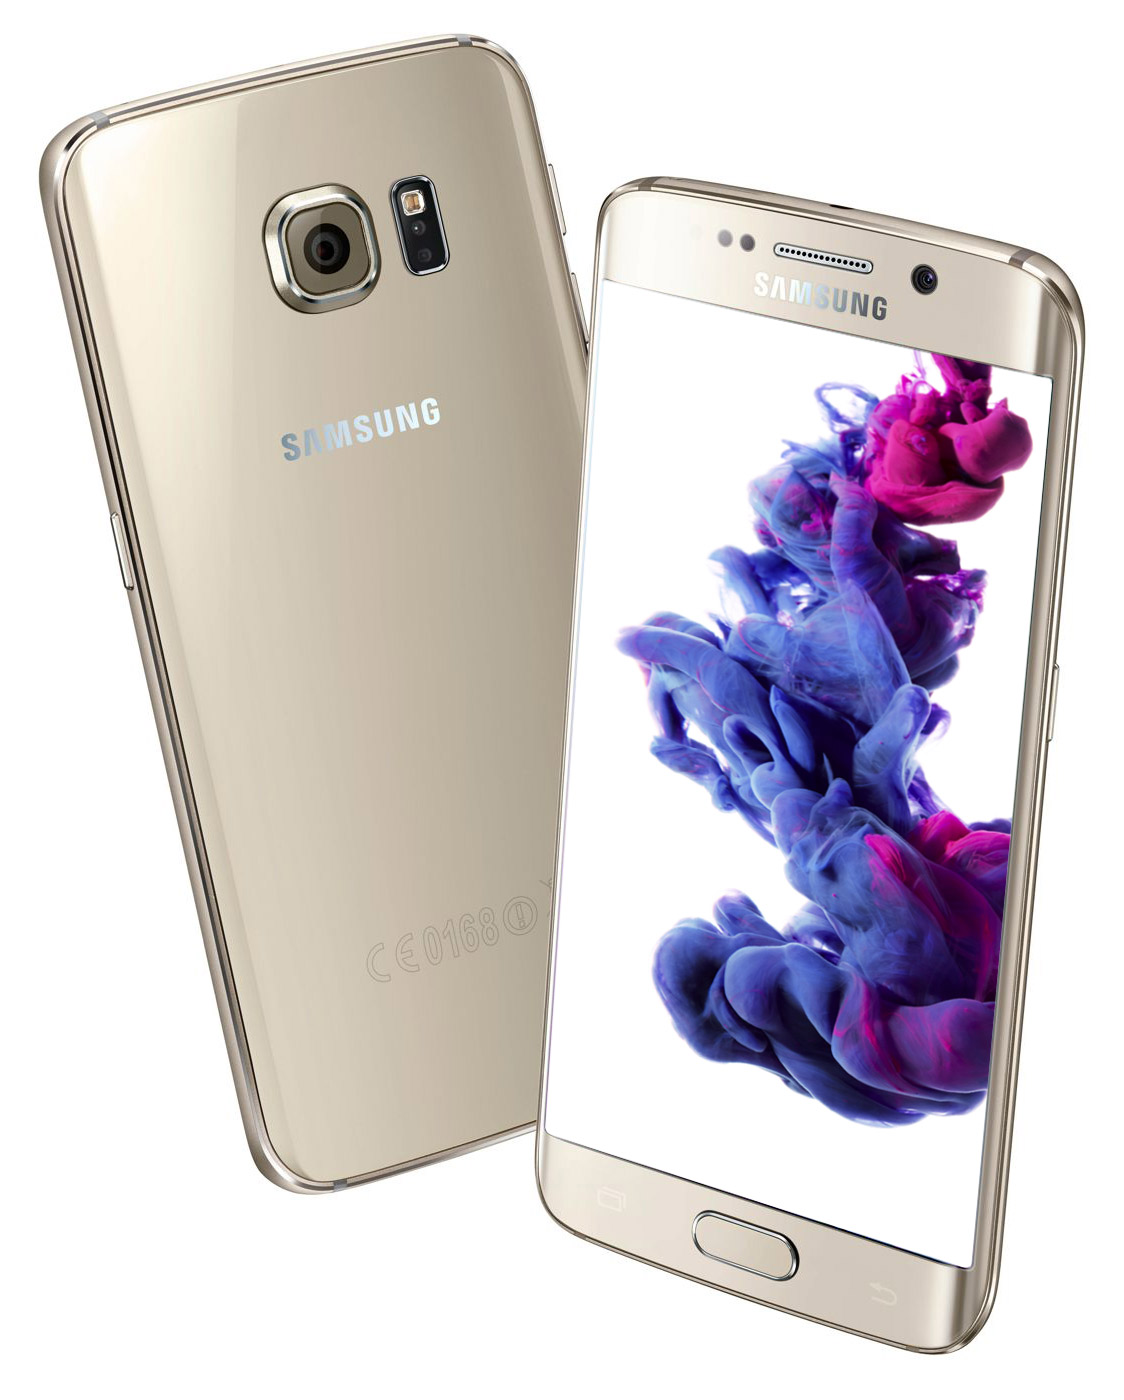 Wie neu: Samsung Galaxy S6 edge Plus